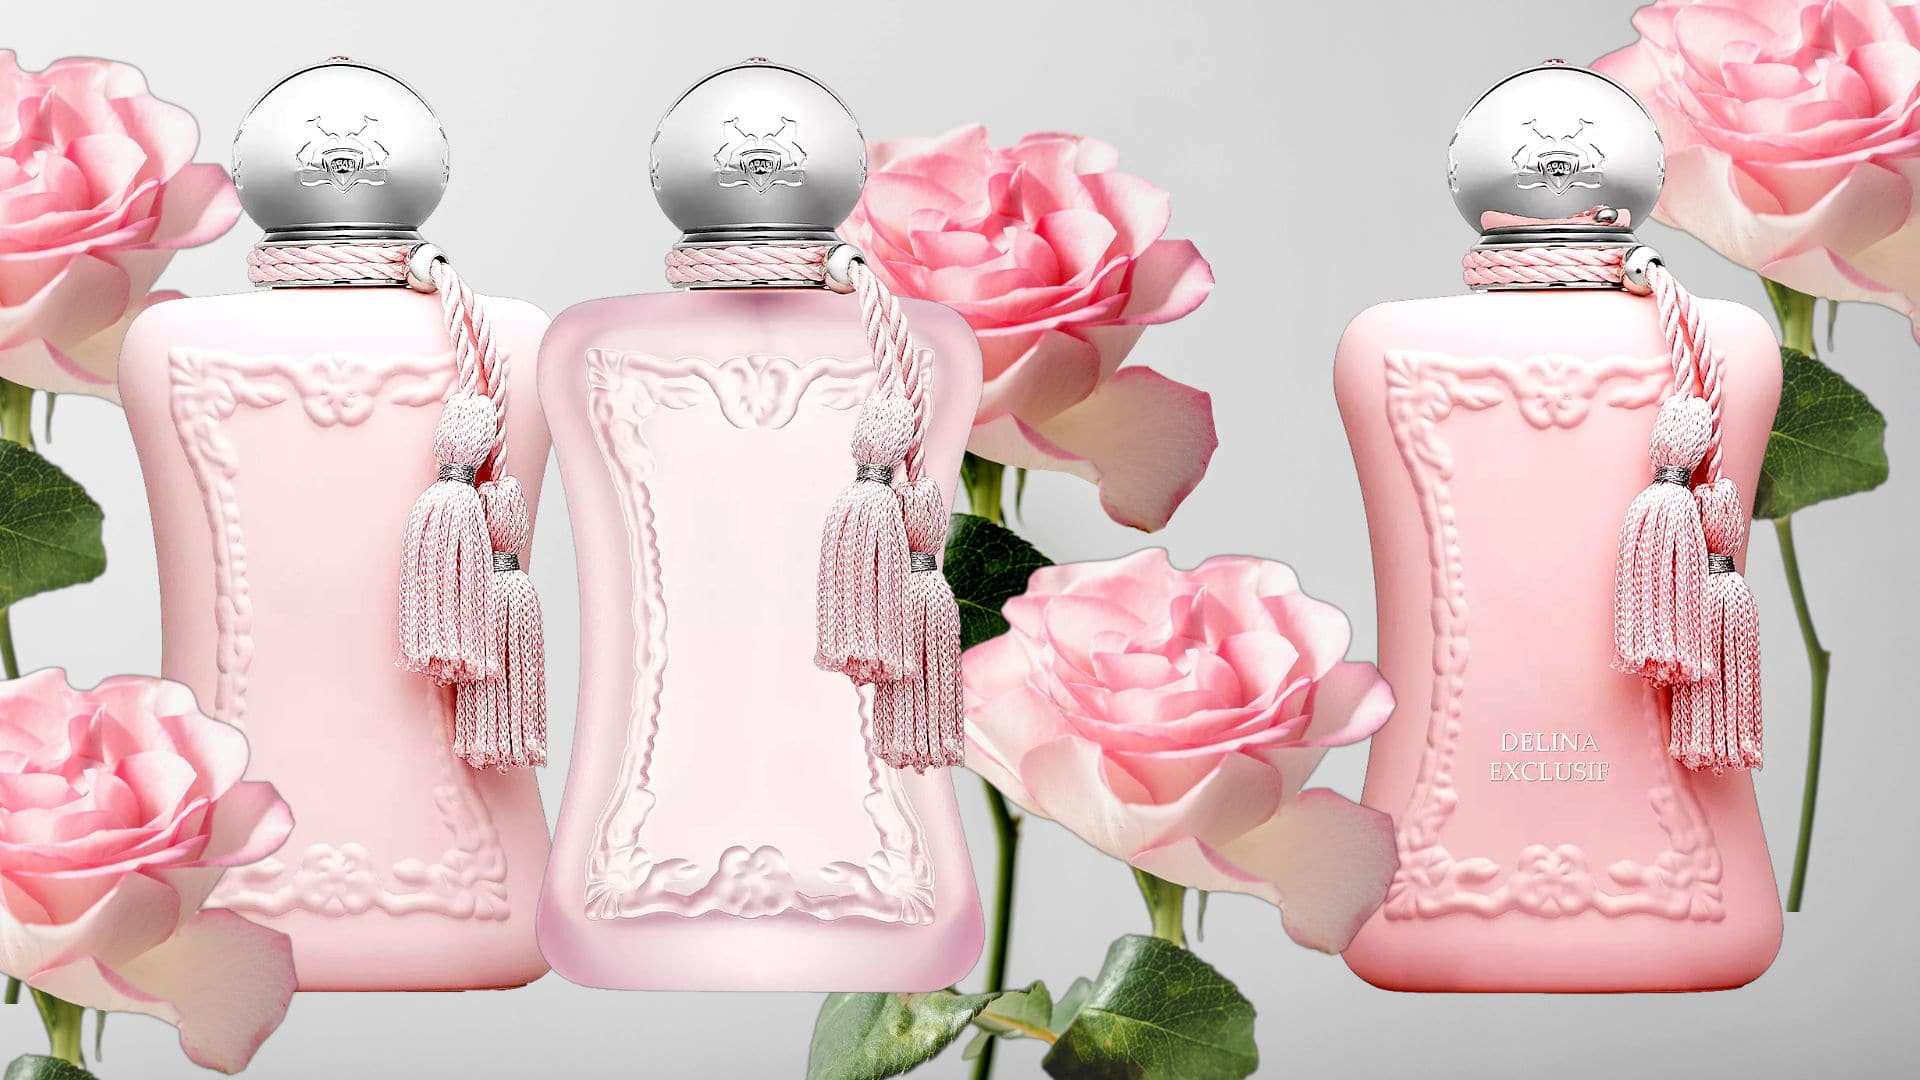 Elegant Delina Perfumes